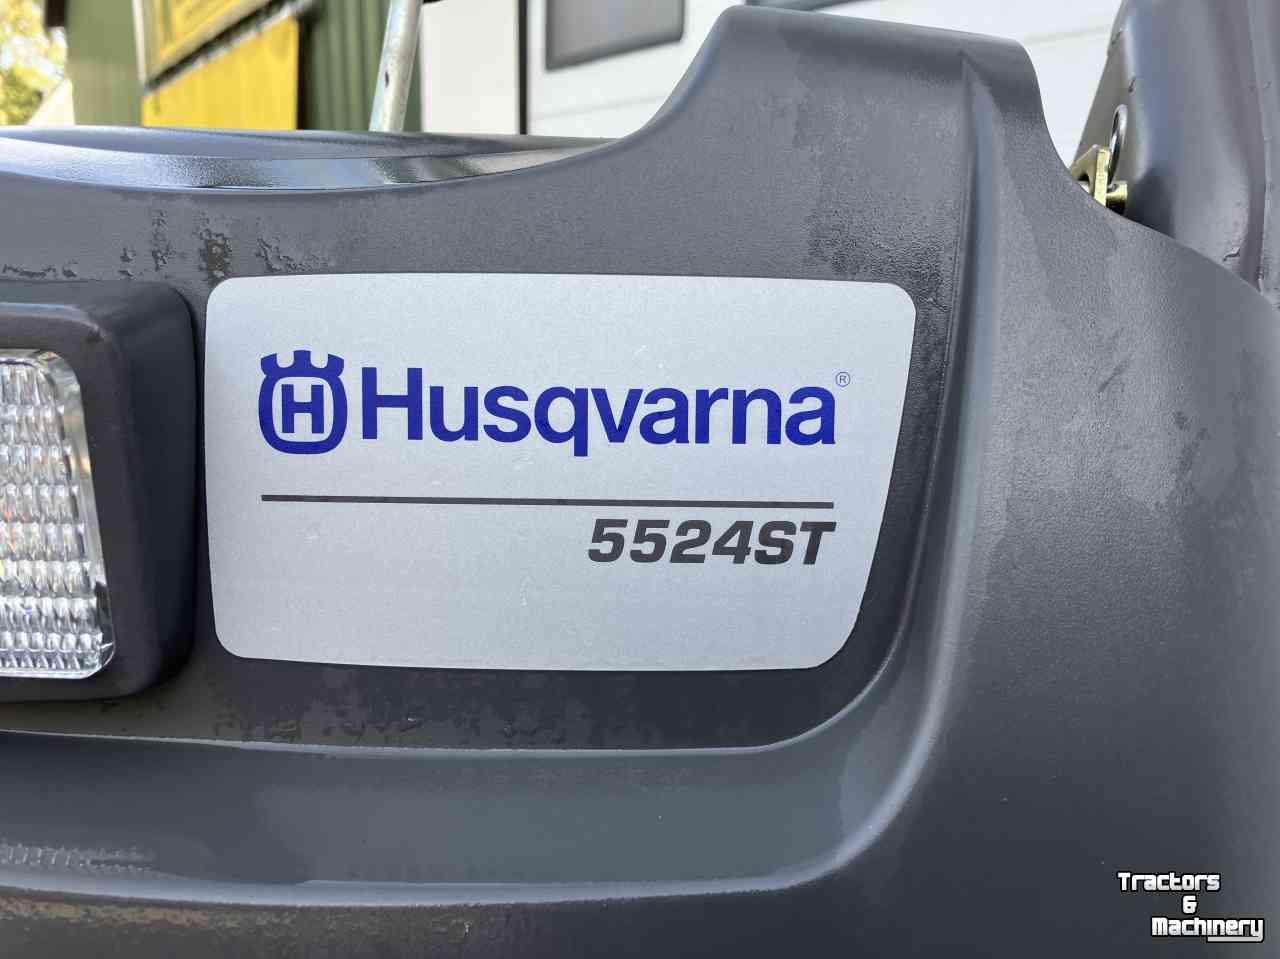 Other Husqvarna 5524 ST